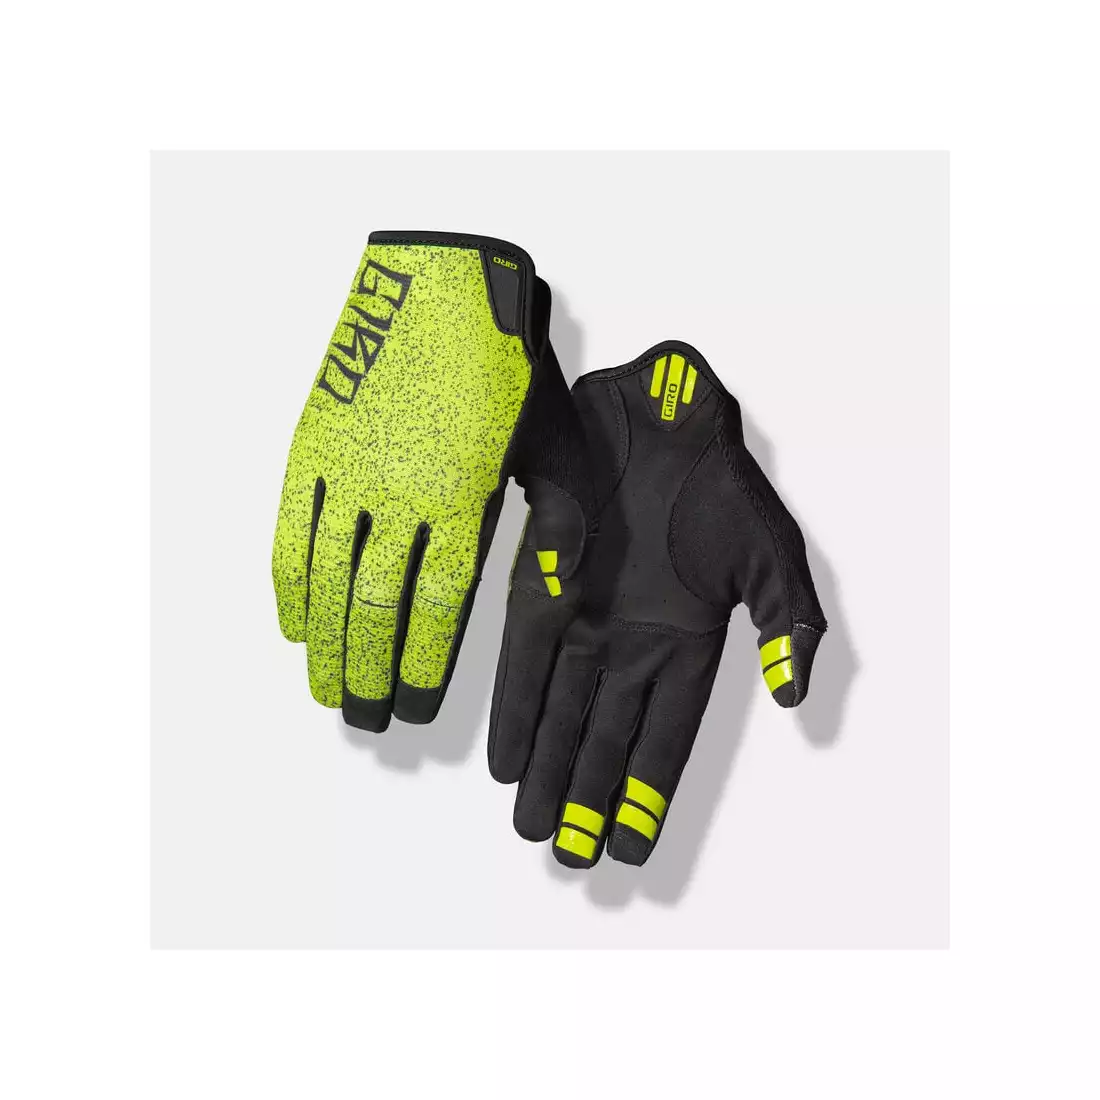 GIRO DND men's cycling gloves green-black